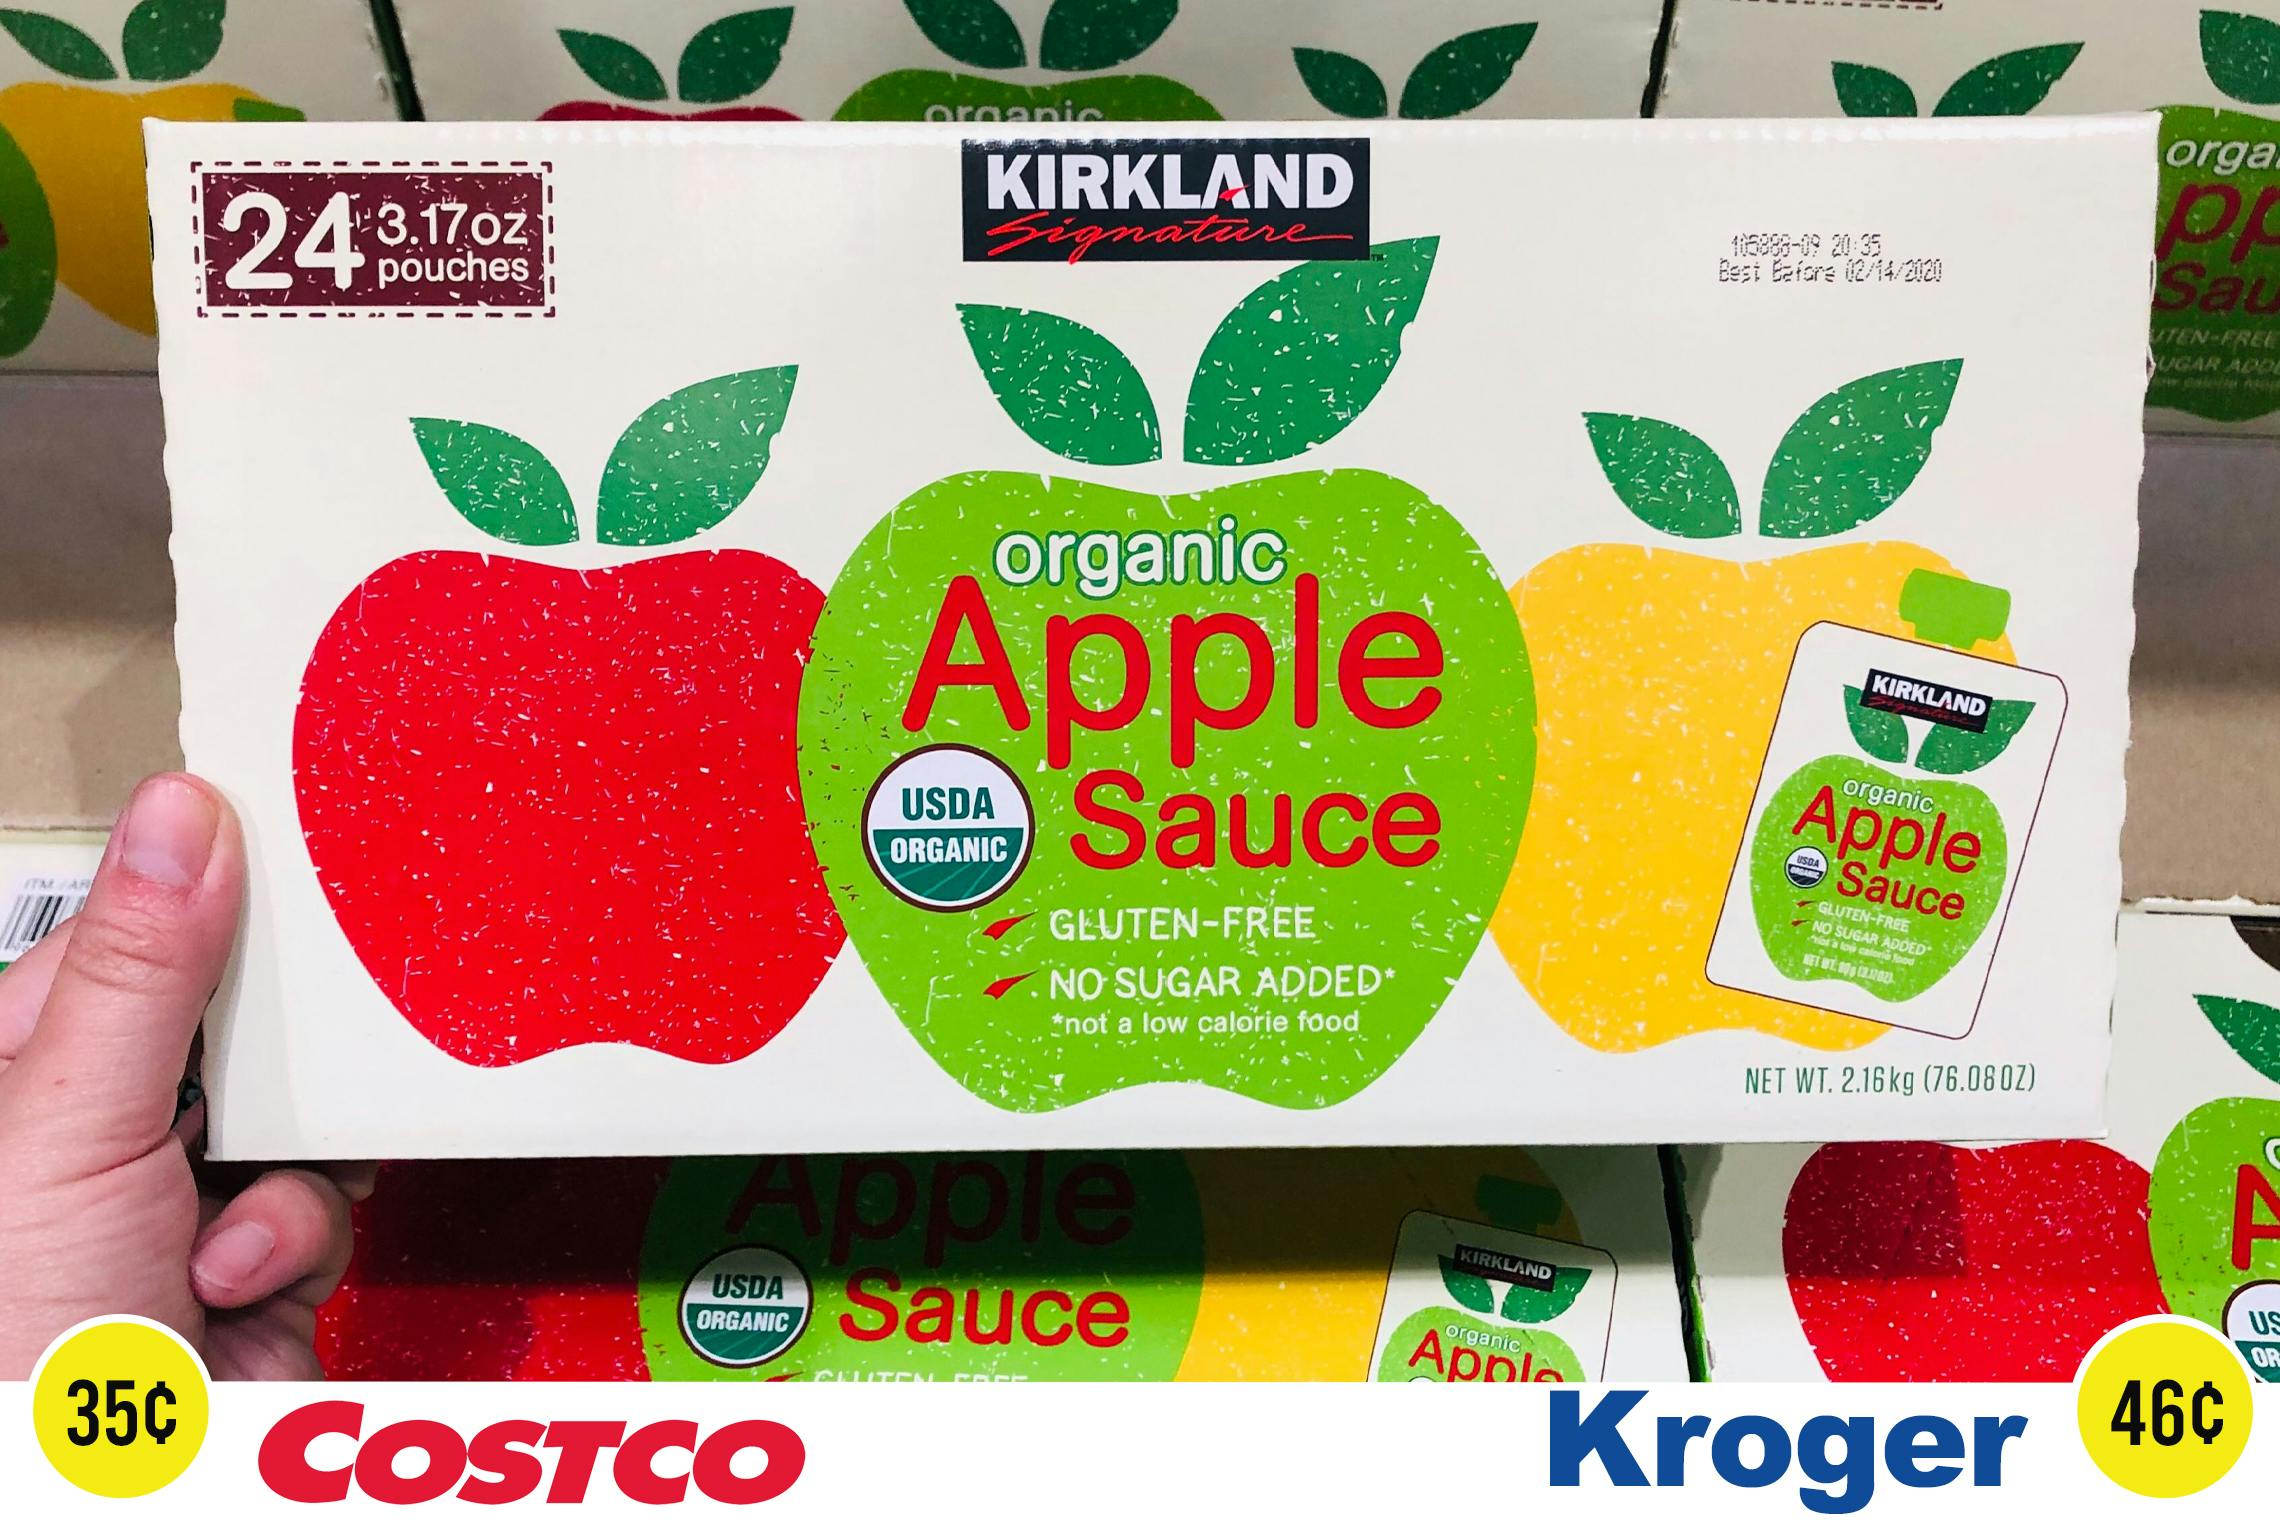 Kirkland brand applesauce at Costco